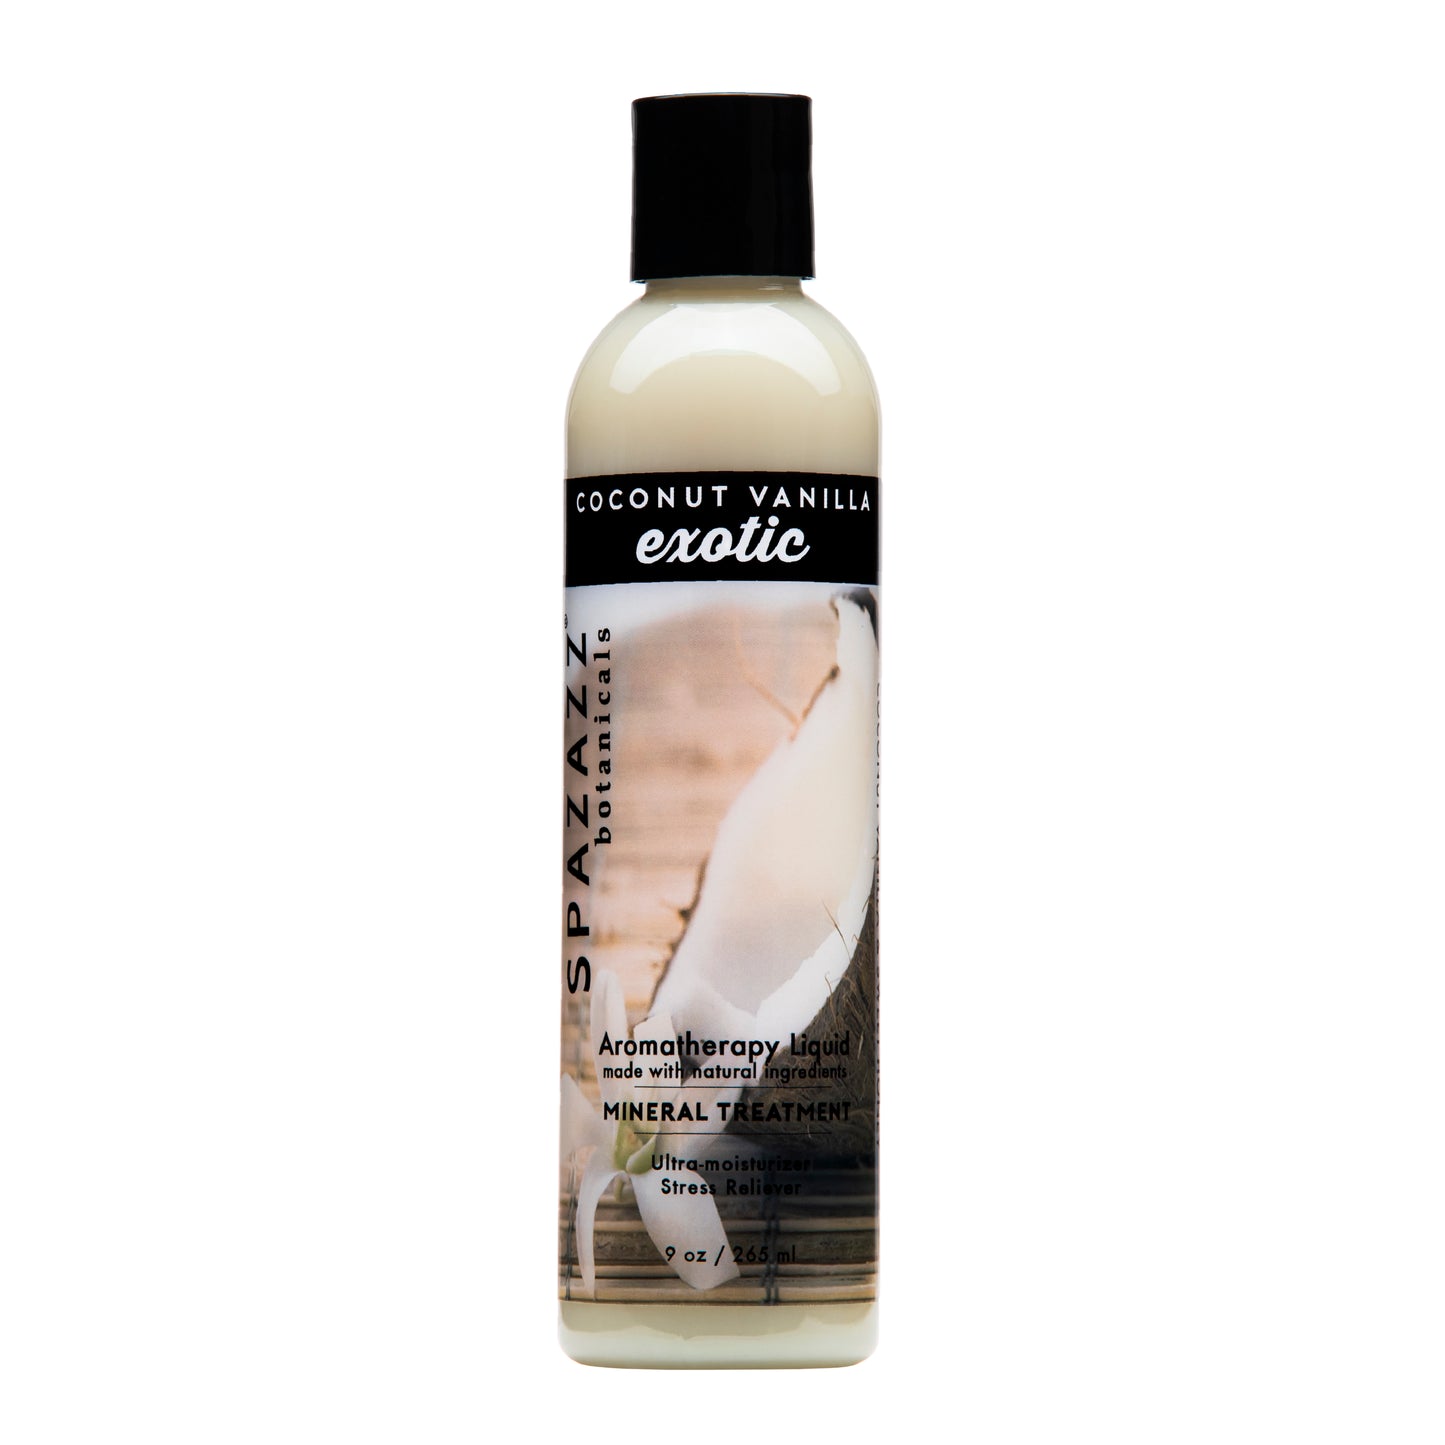 Coconut Vanilla - Exotic 9oz Aromatherapy Elixir